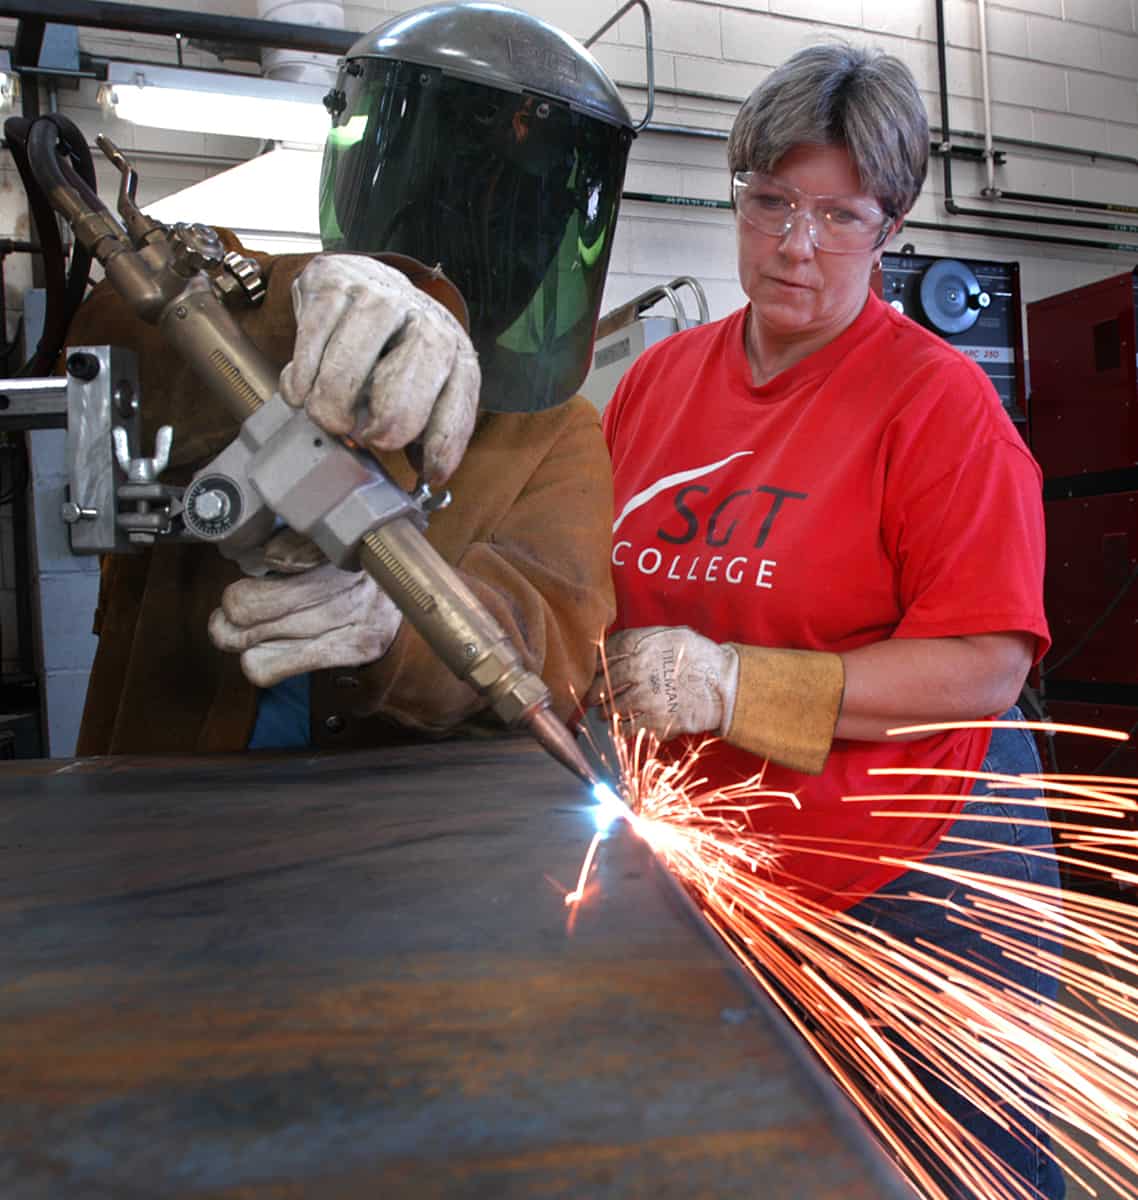 SGTC Crisp County Center Welding Instructor Brenda Butler Gilliam (r) is shown above instructing a student on proper welding techniques.